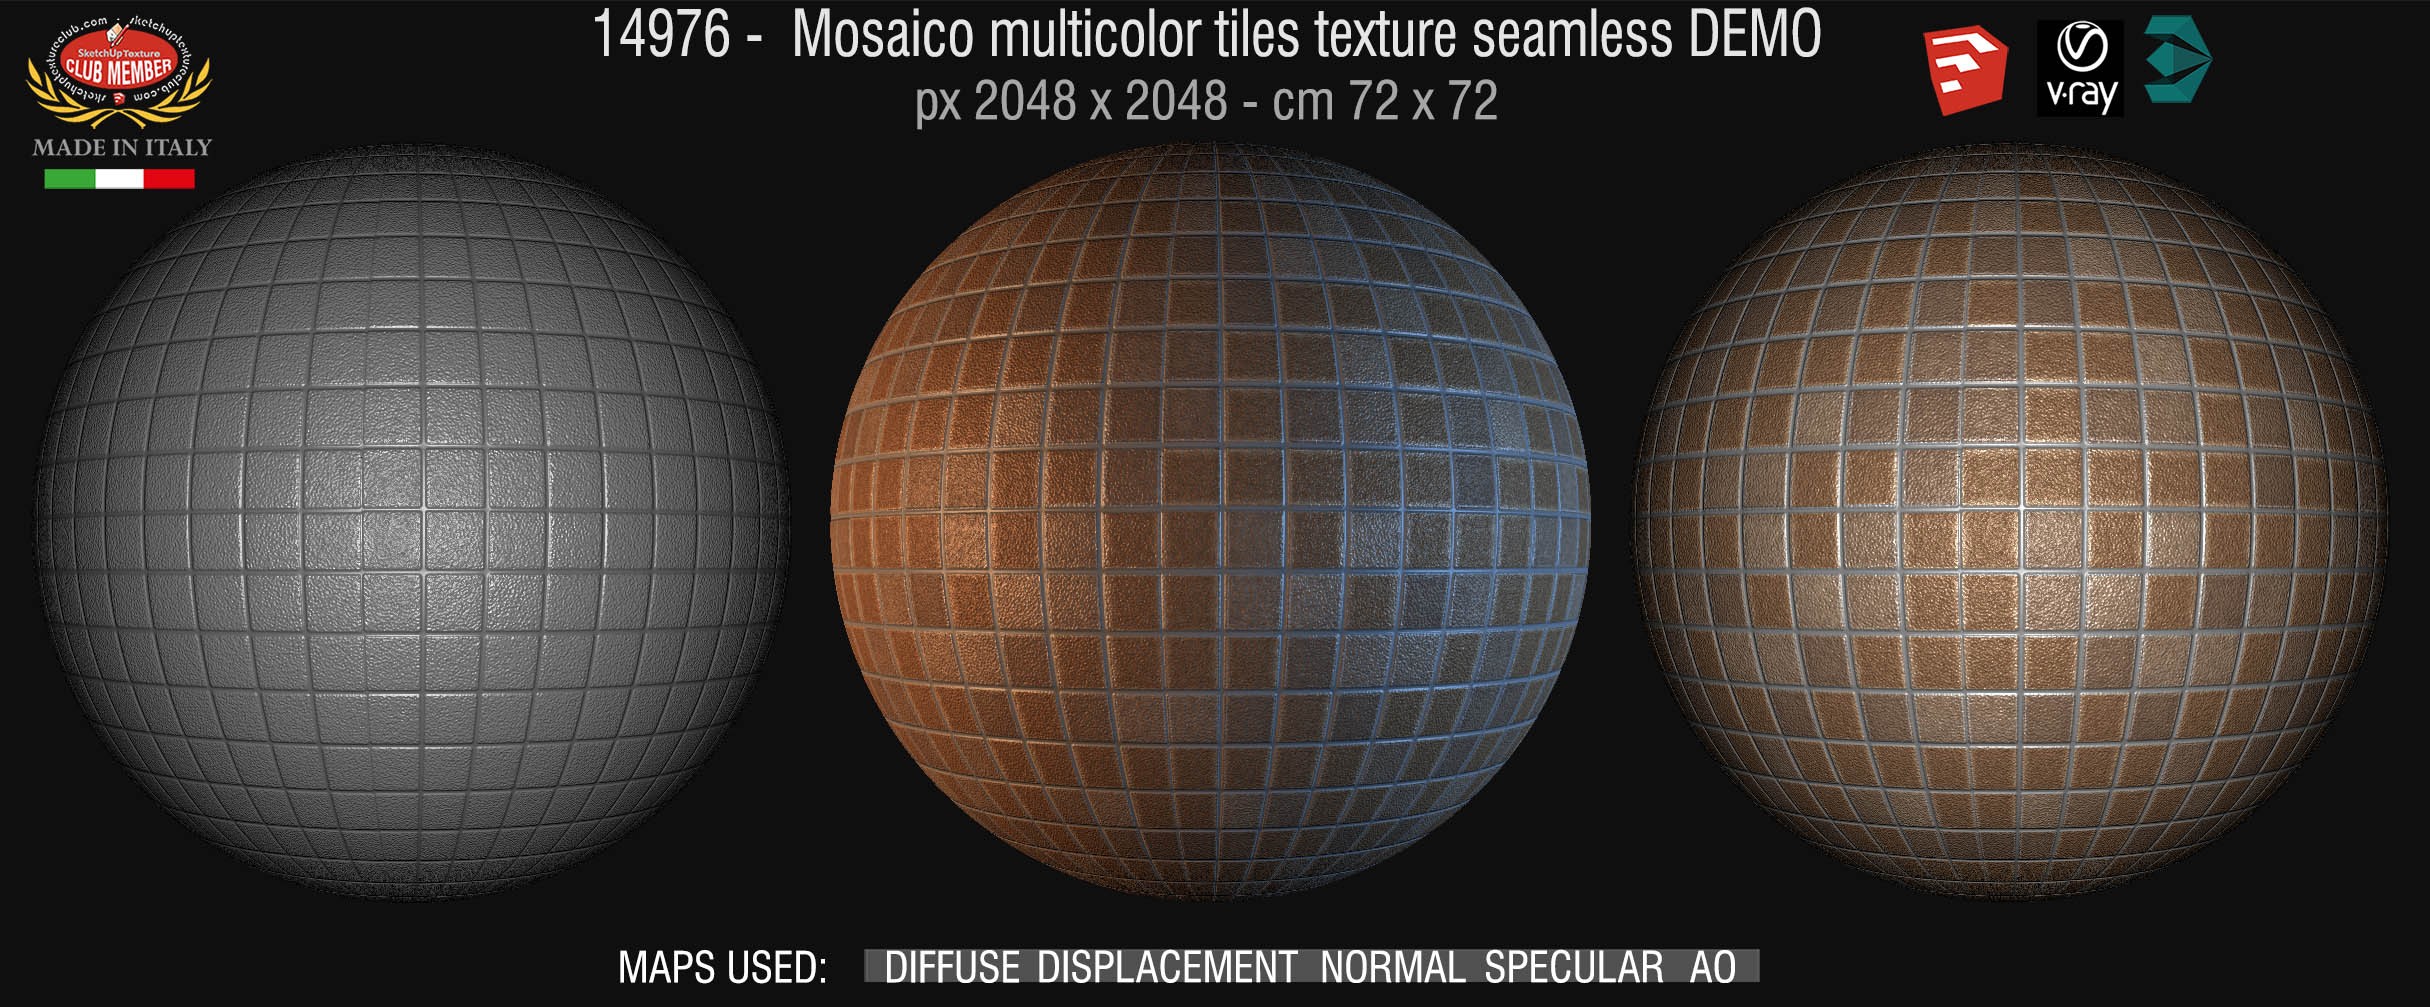 14976 Mosaico multicolor tiles texture seamless + maps DEMO